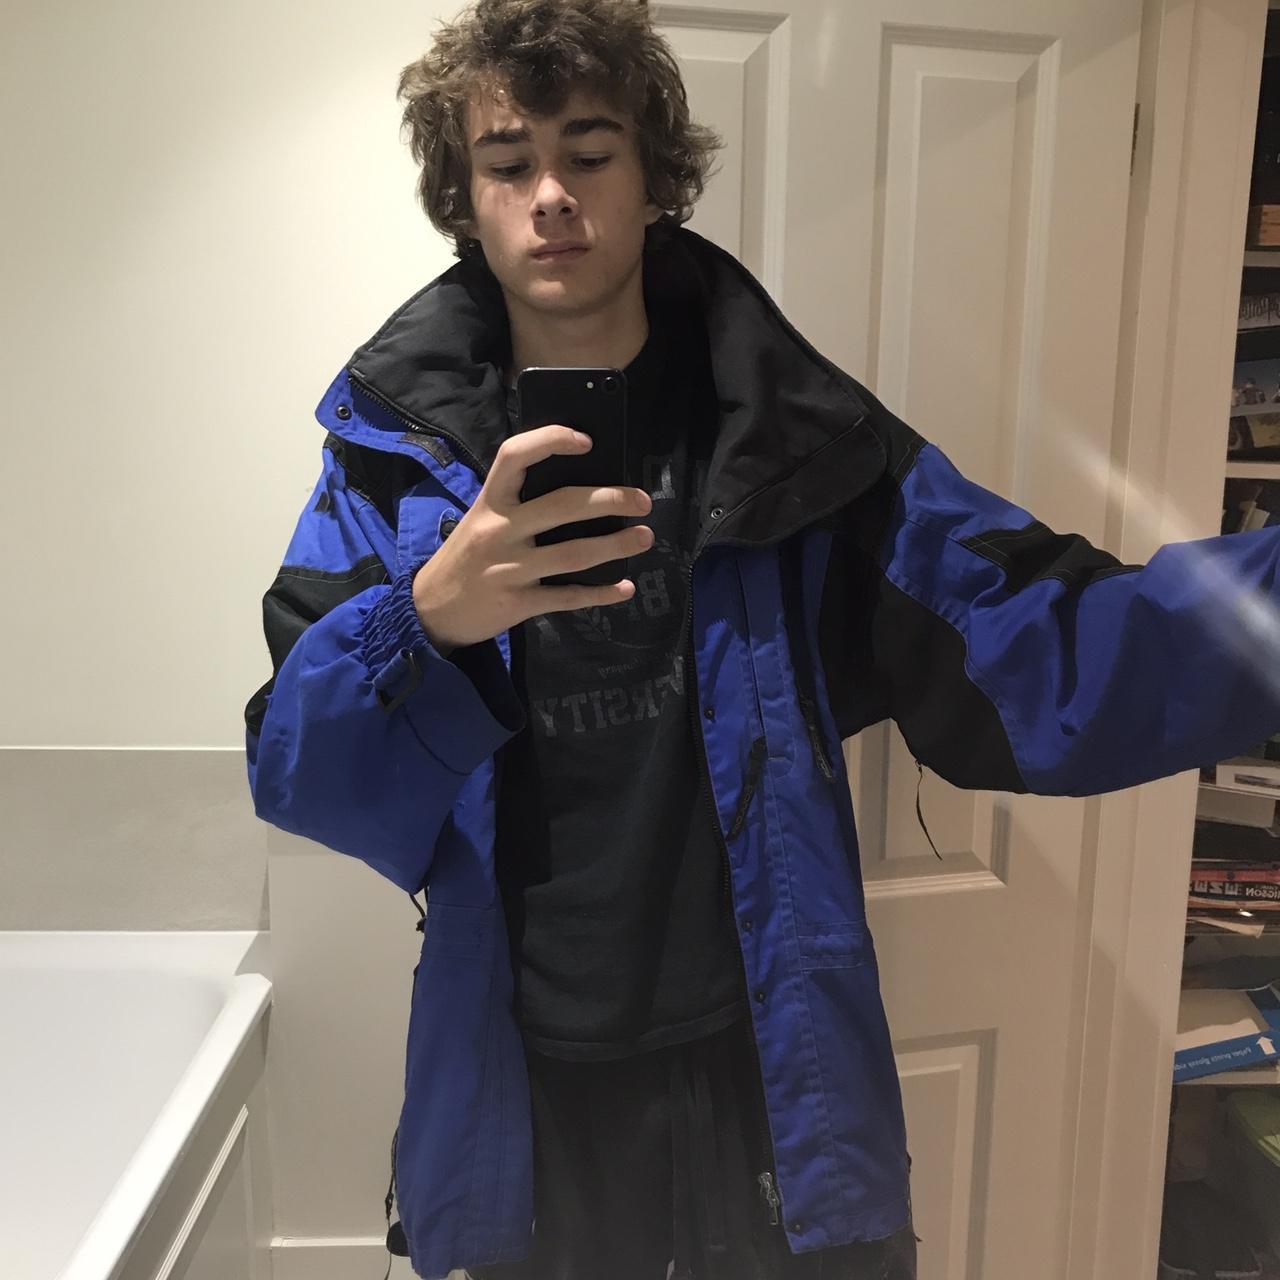 Couloir blue high quality jacket - Depop